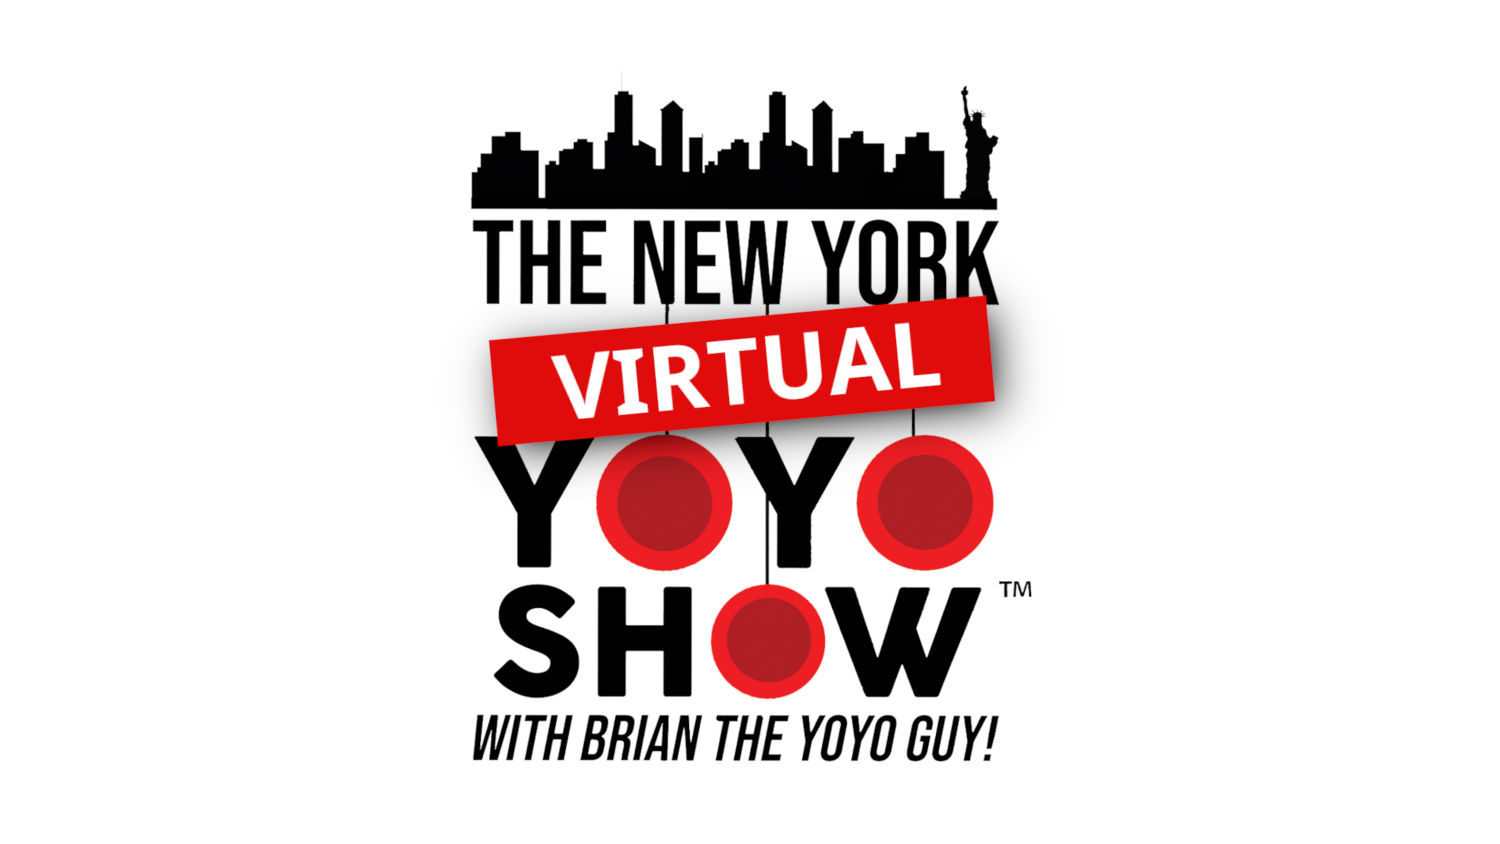 New York Virtual Yoyo Show™ youtube thumbnail.